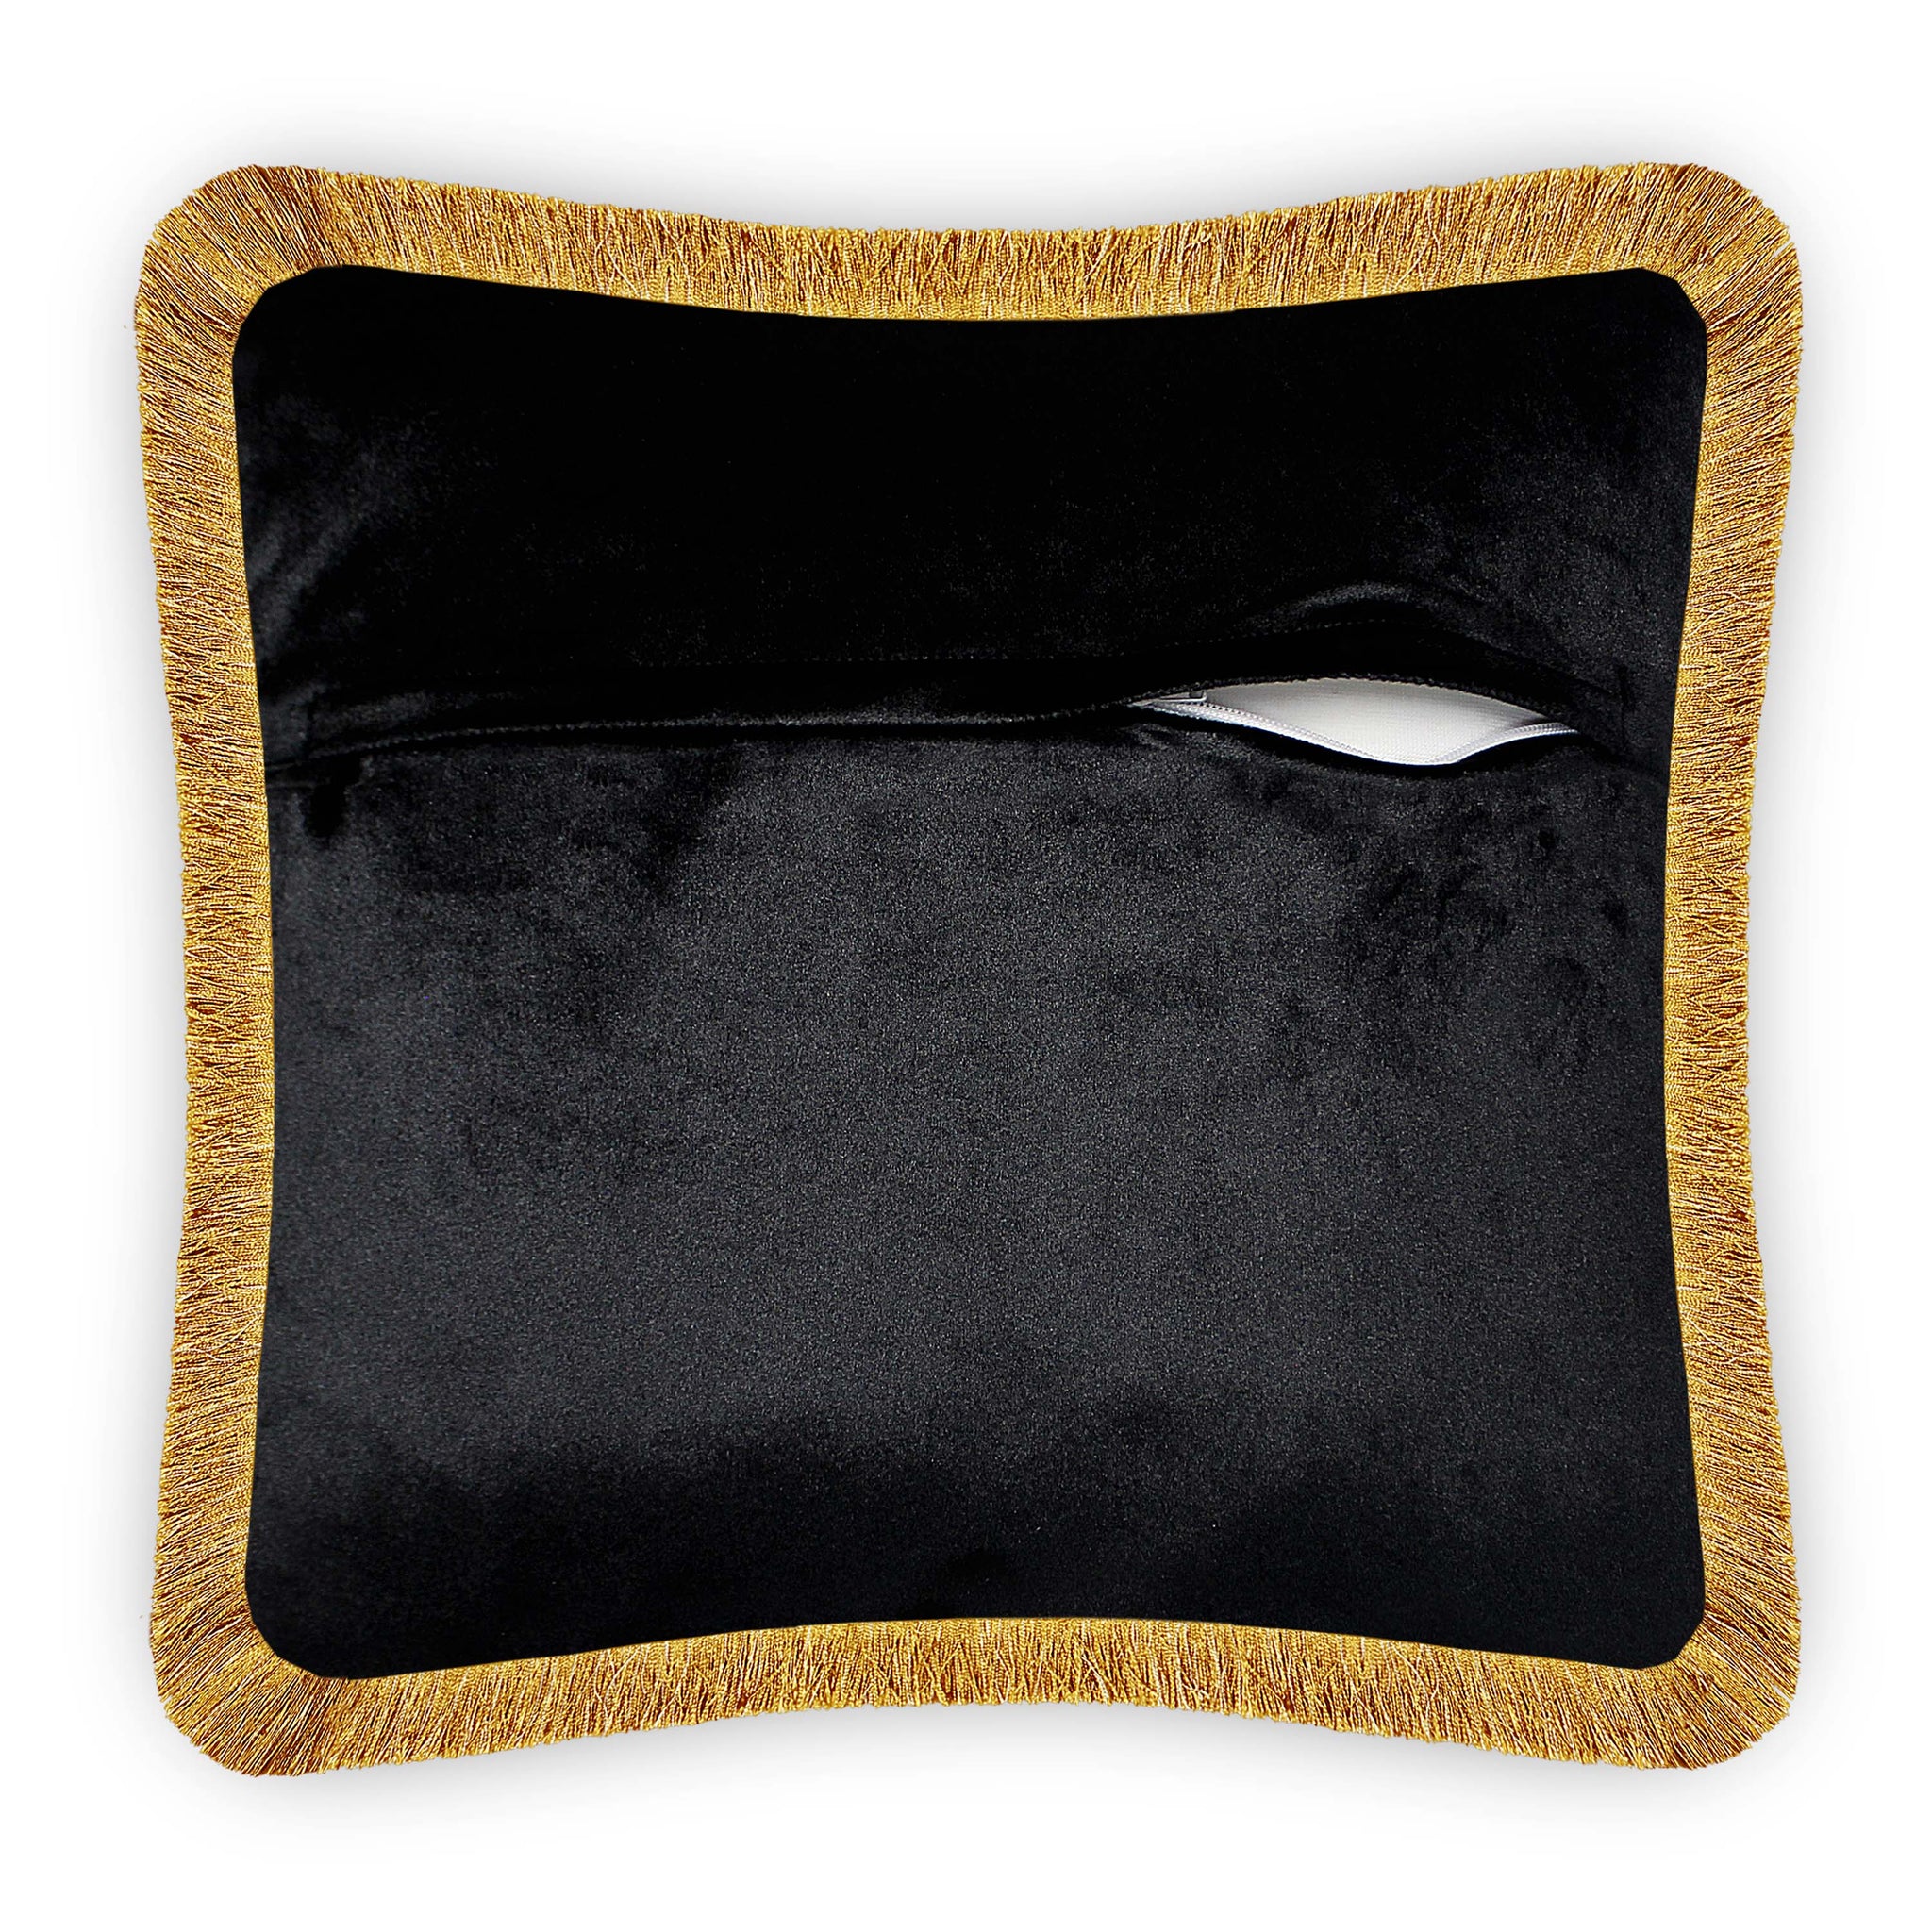 Black Velvet Cushion Cover William Morris Botanic Leaf Decorative Pillowcase Vintage Home Décor Throw Pillow for Sofa Chair Couch Bedroom 45x45 cm 18x18 In